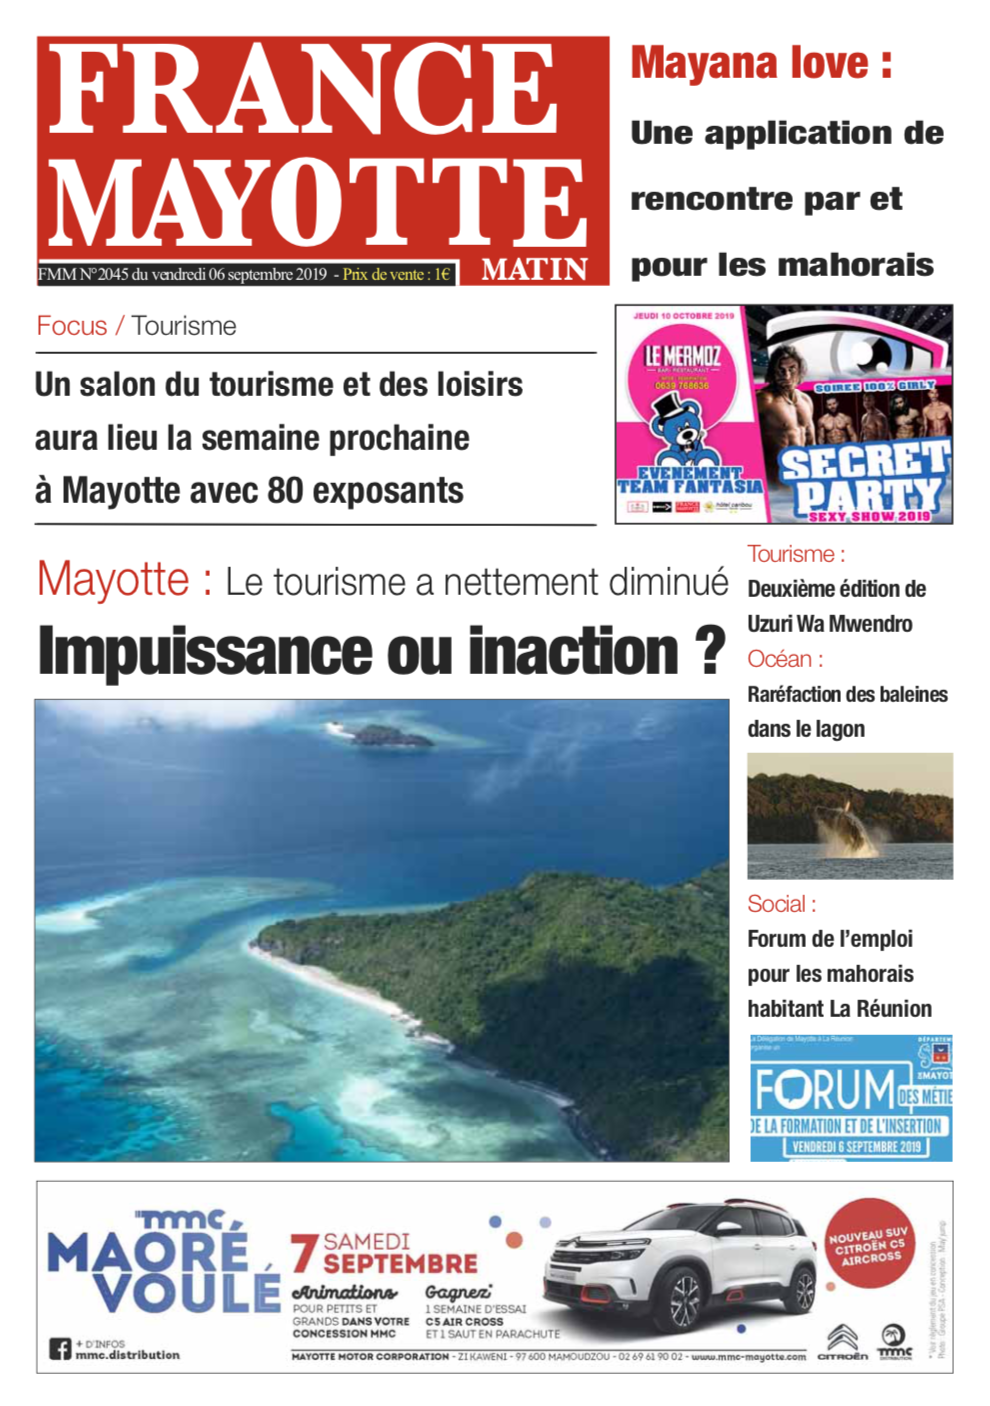 France Mayotte Vendredi 6 septembre 2019